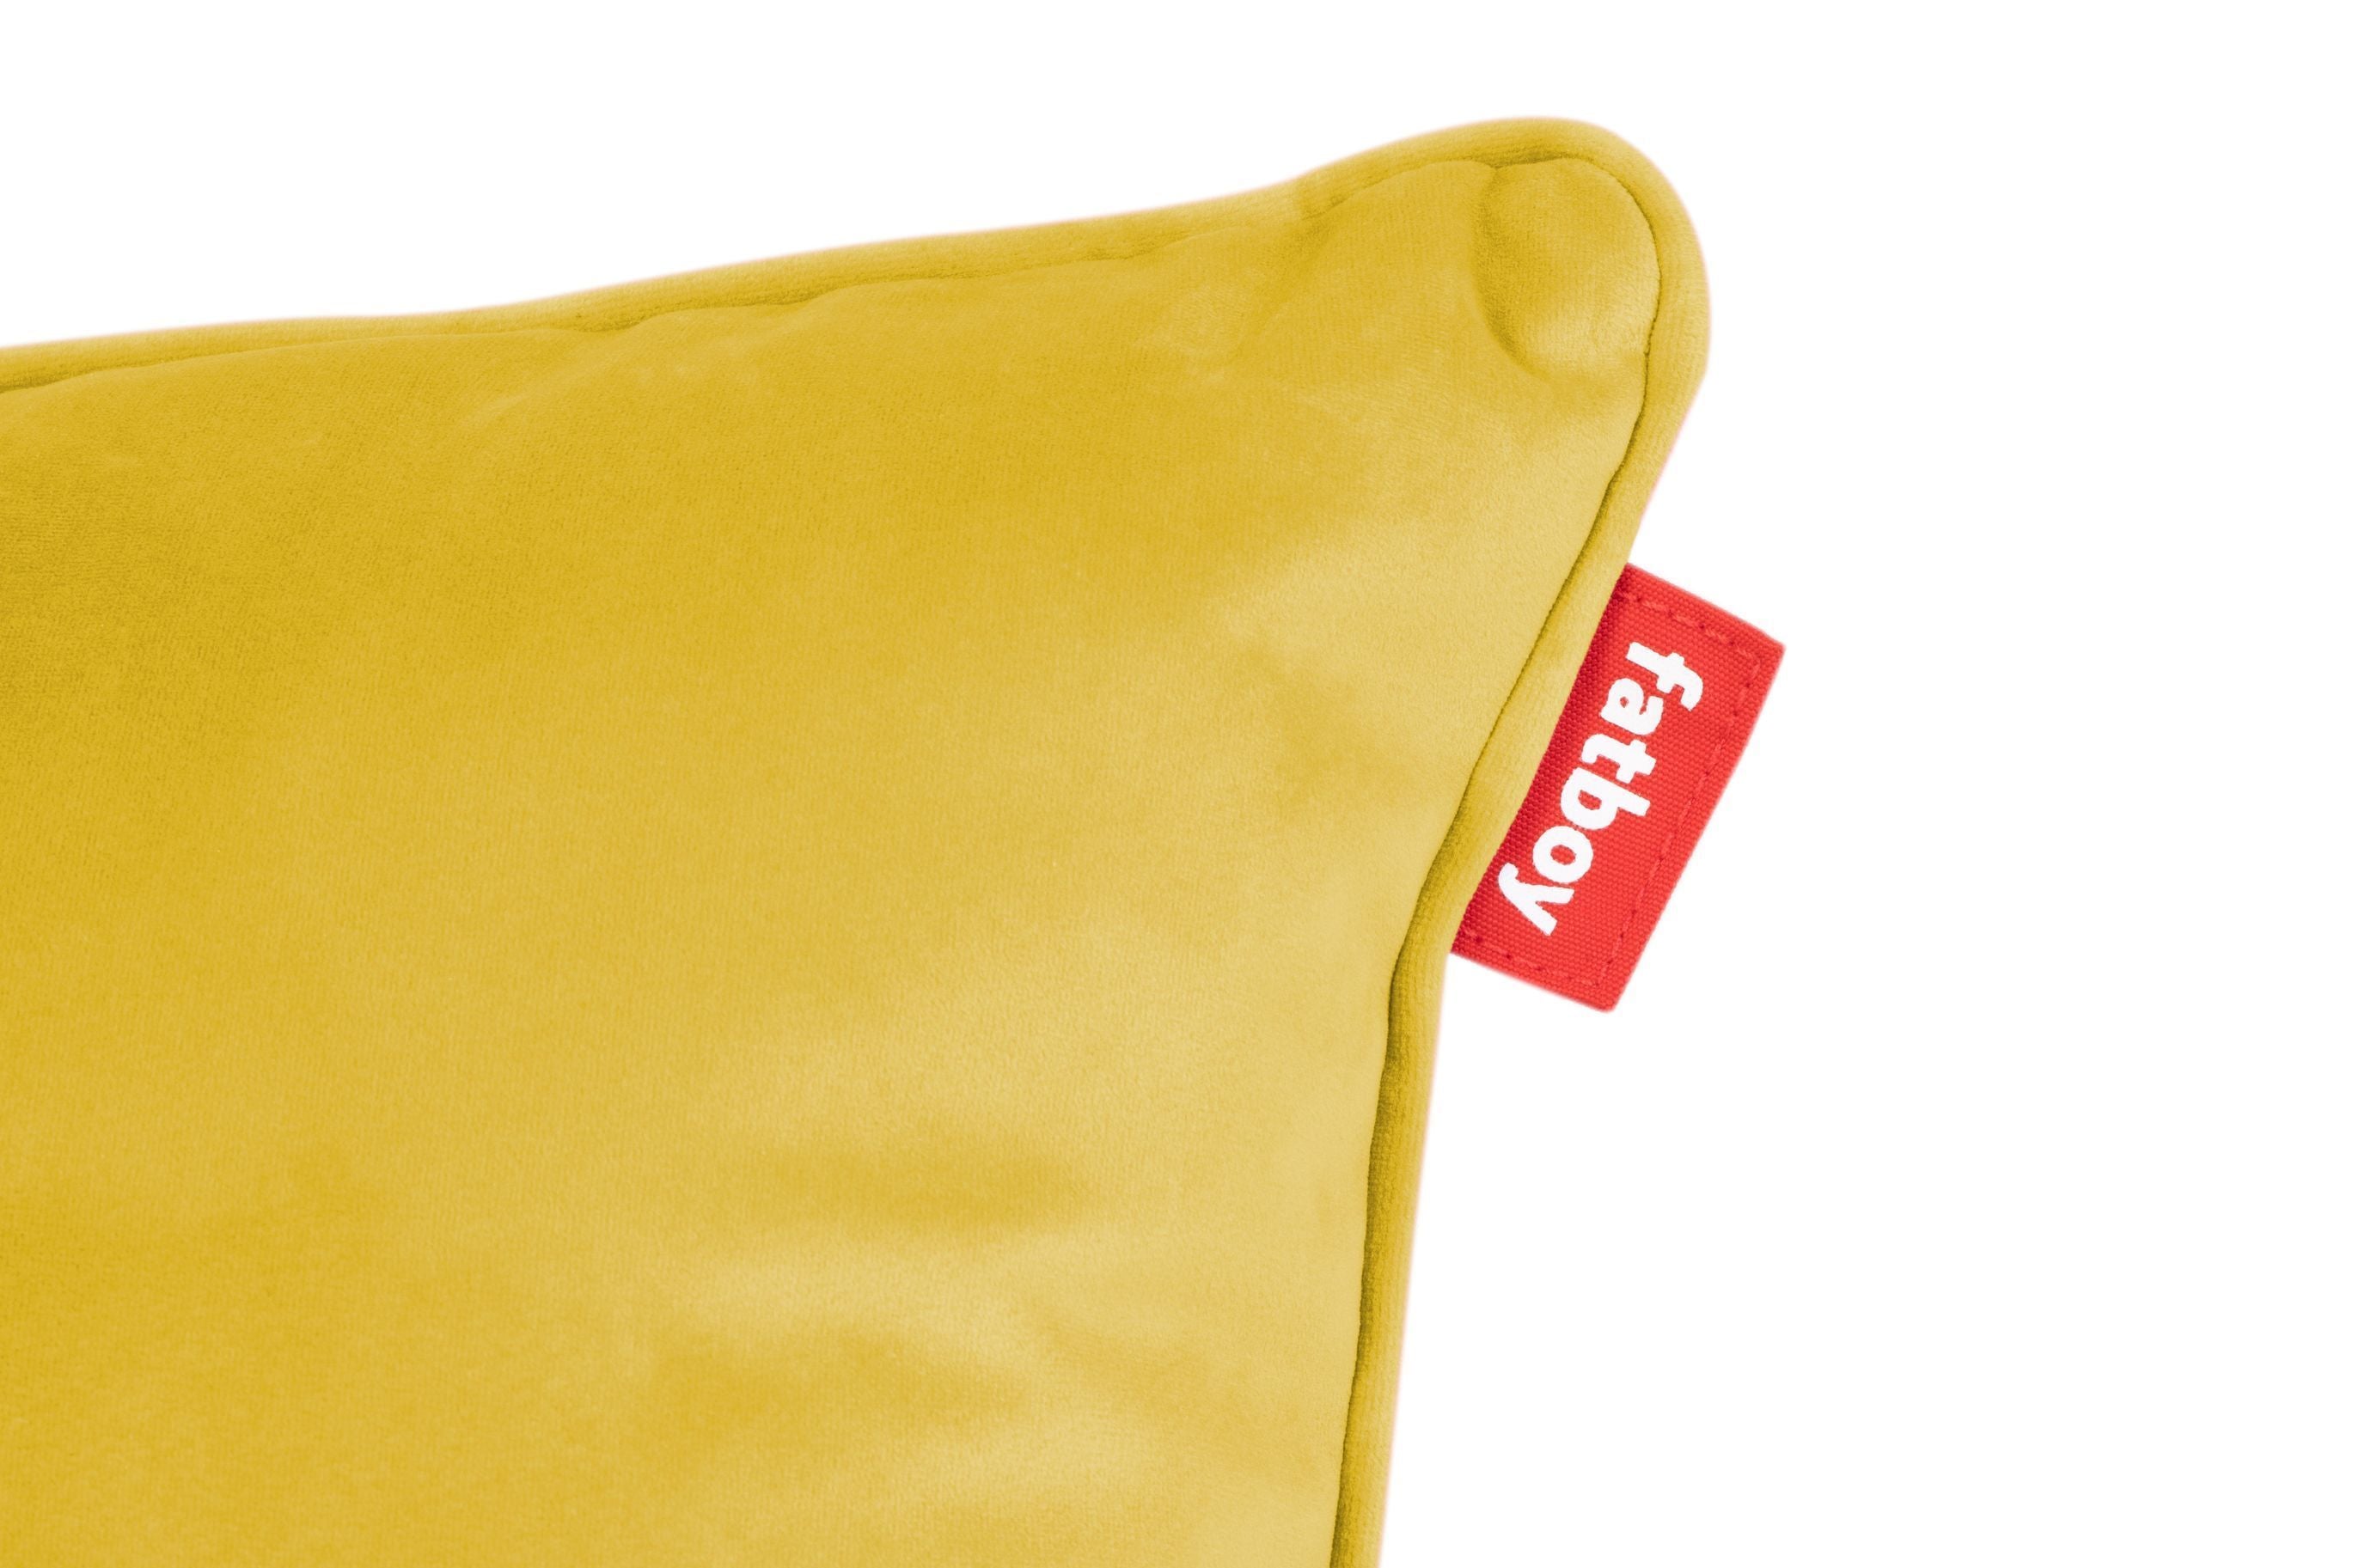 Fatboy Square Velvet Cushion återvunnet 50x50 cm, guld honung